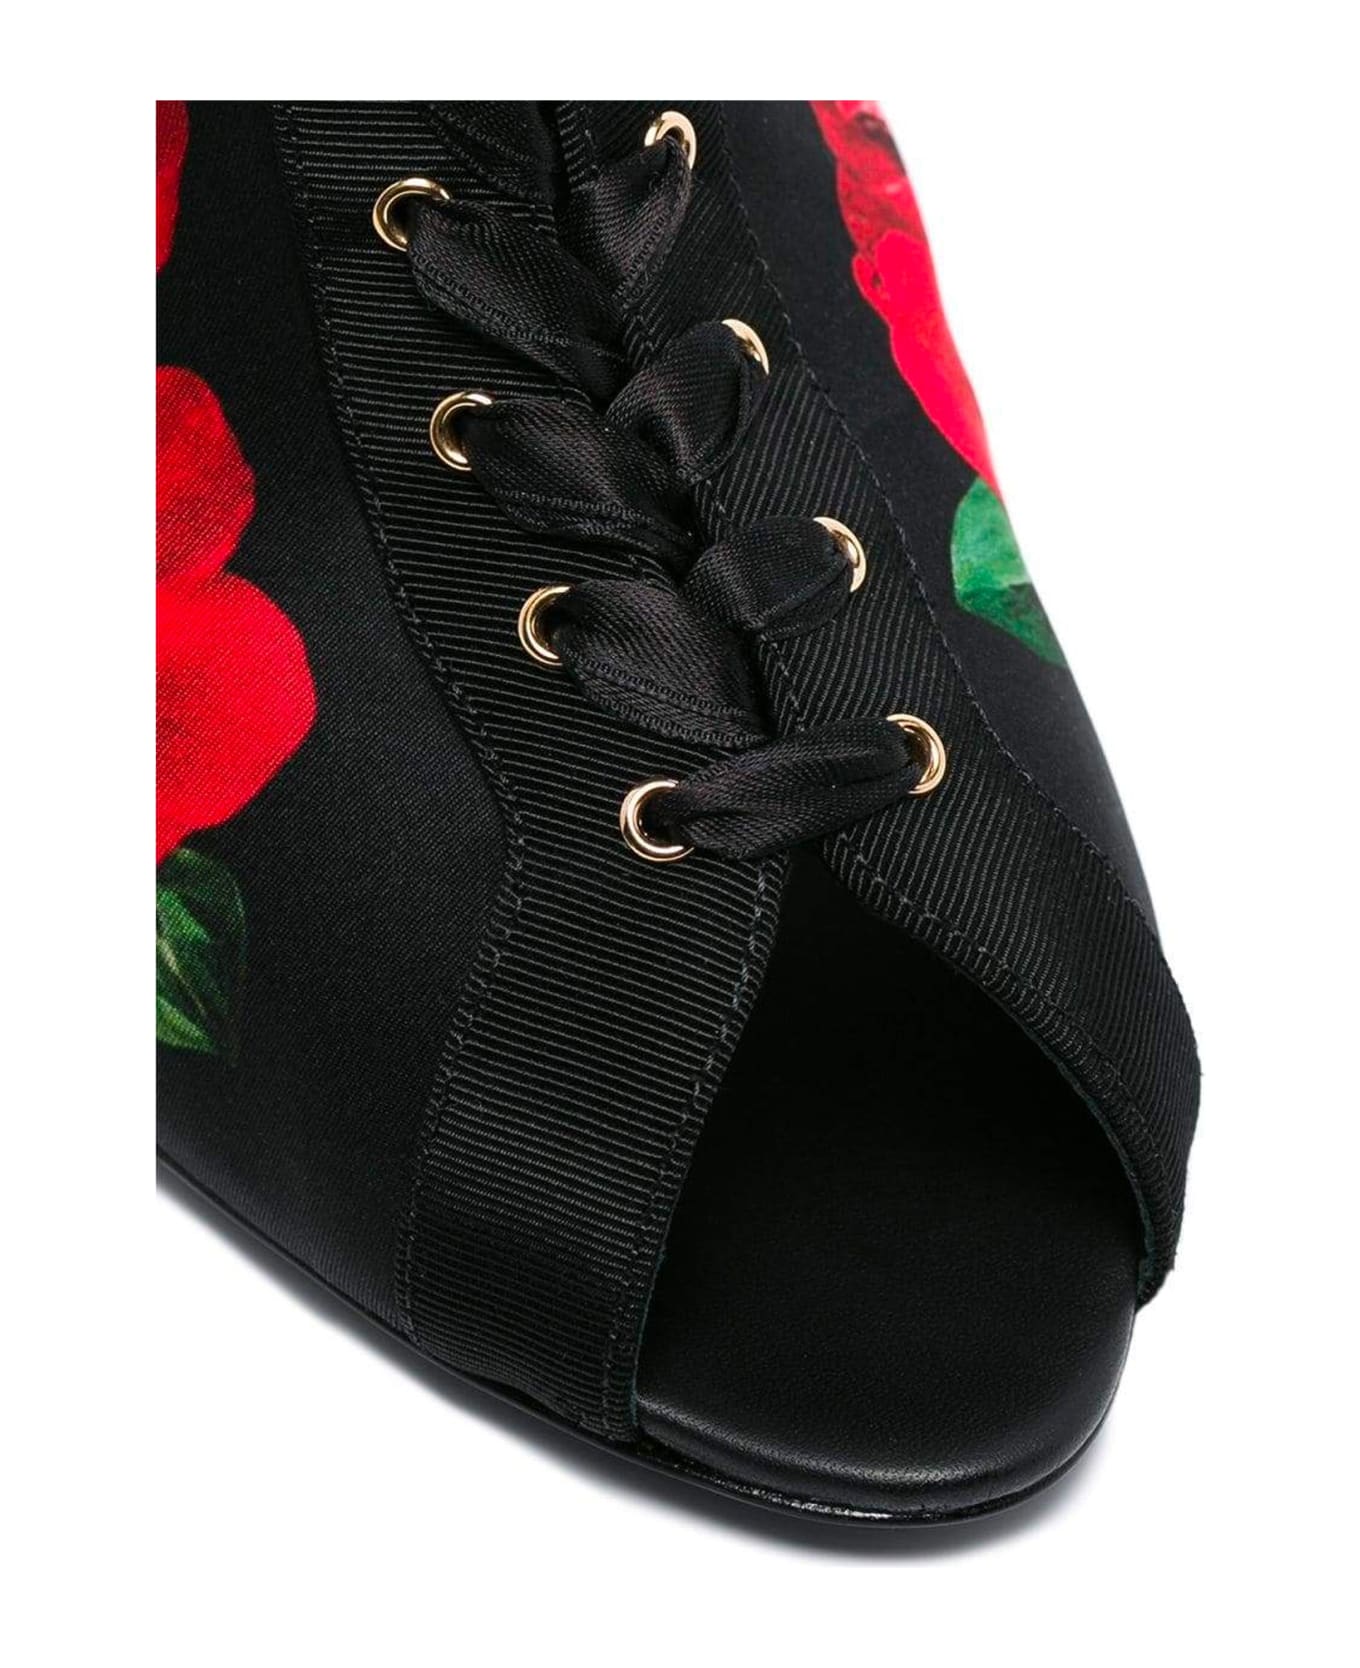 Dolce & Gabbana Bette Printed Boots - Black